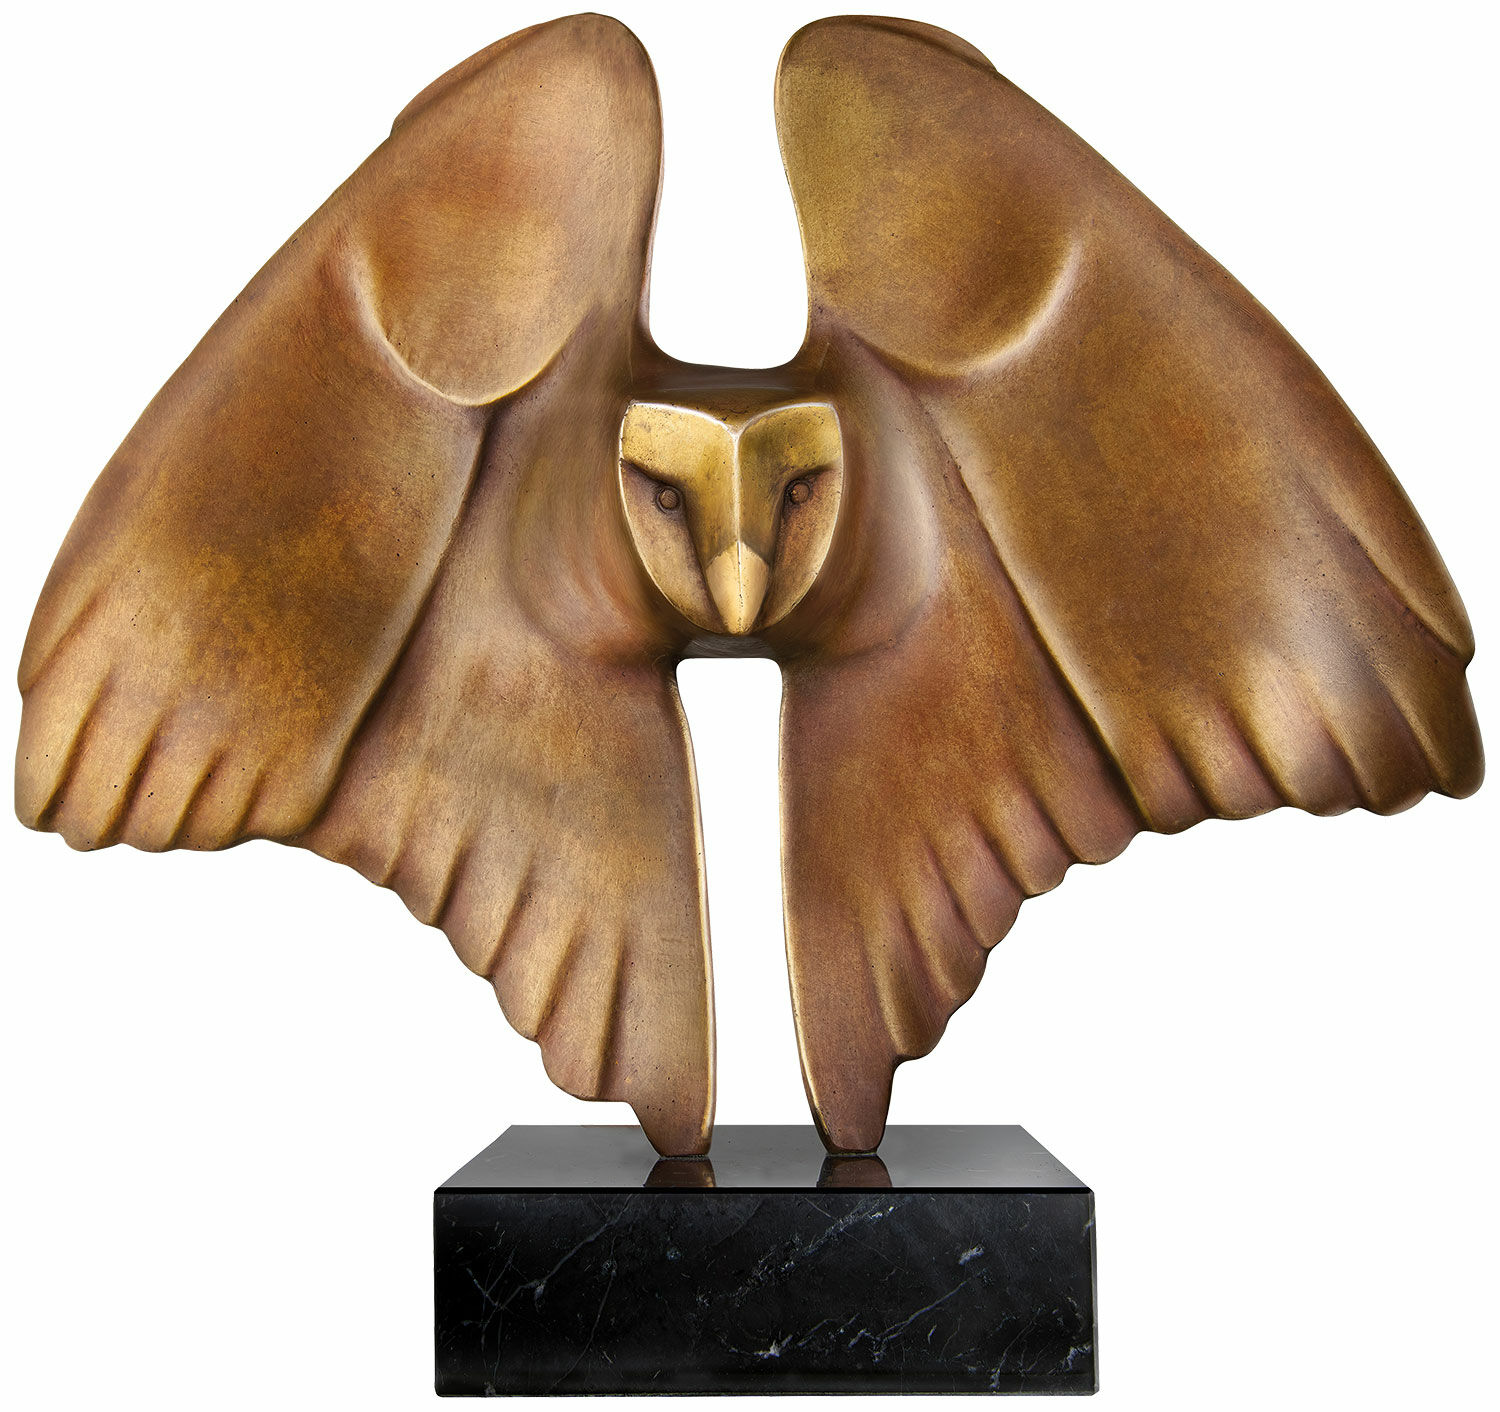 Sculpture "Flying Owl", bronze by Evert den Hartog